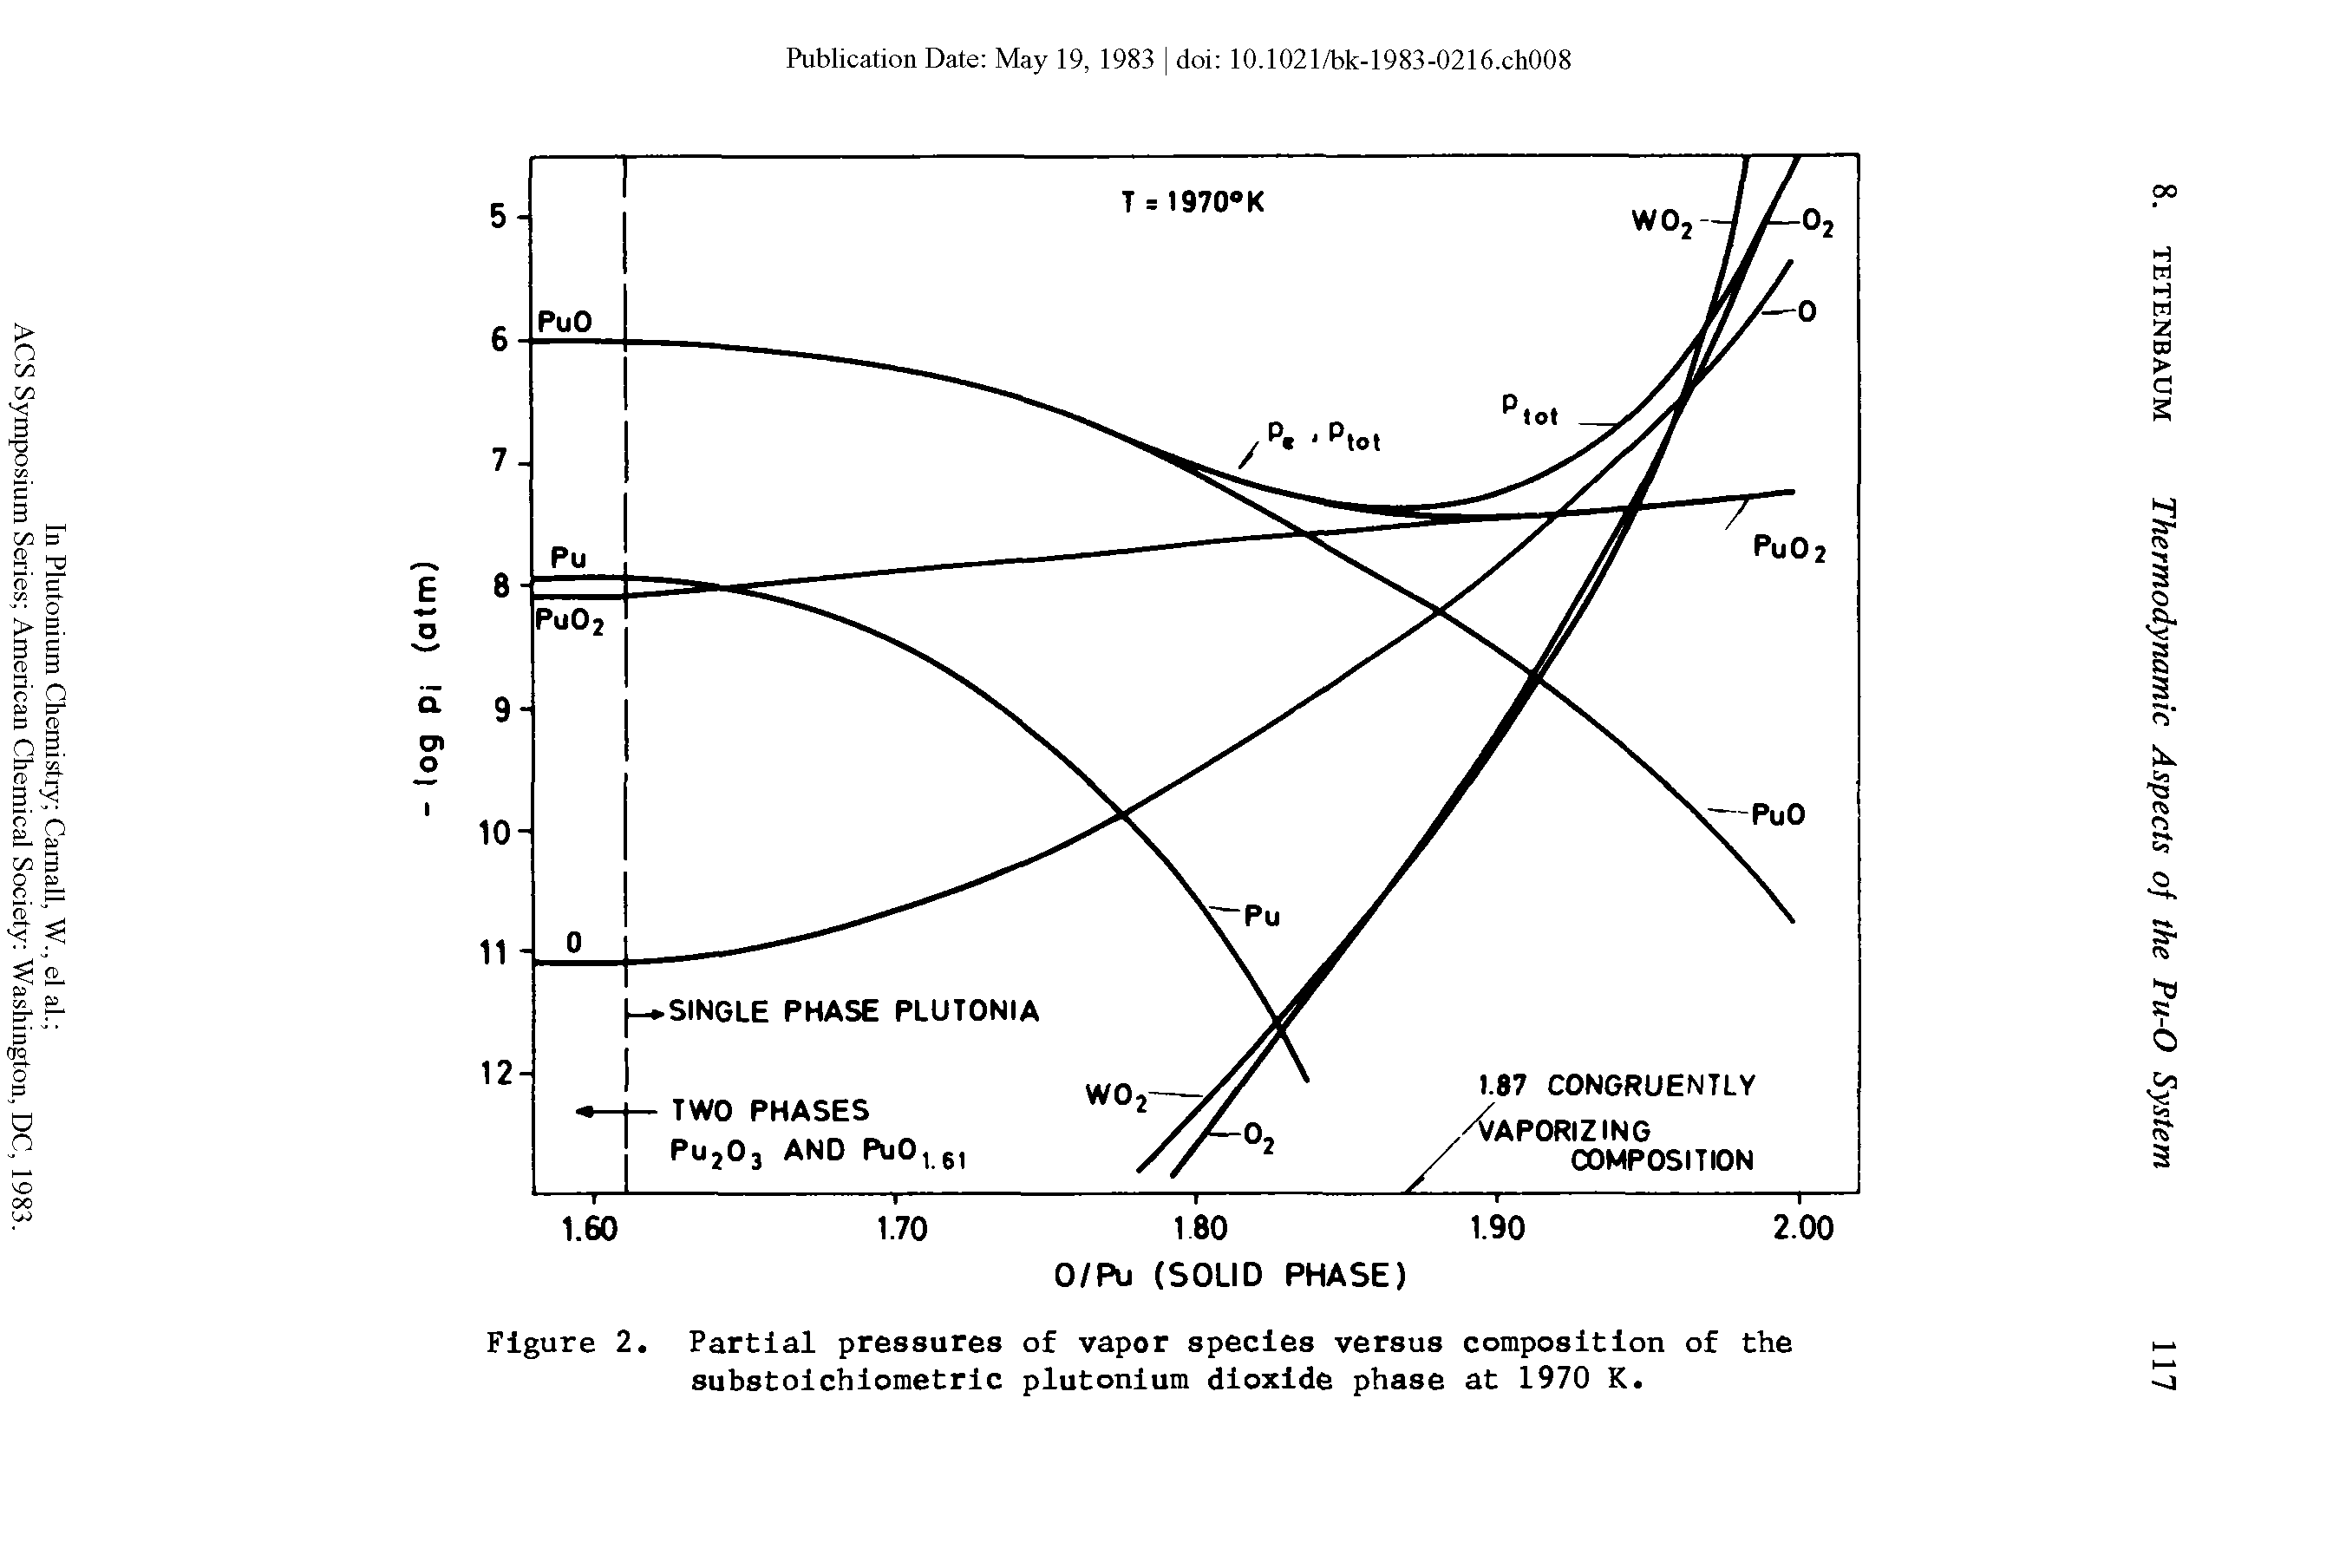 Figure 2. Partial pressures of vapor species versus composition of the substoichiometric plutonium dioxide phase at 1970 K.